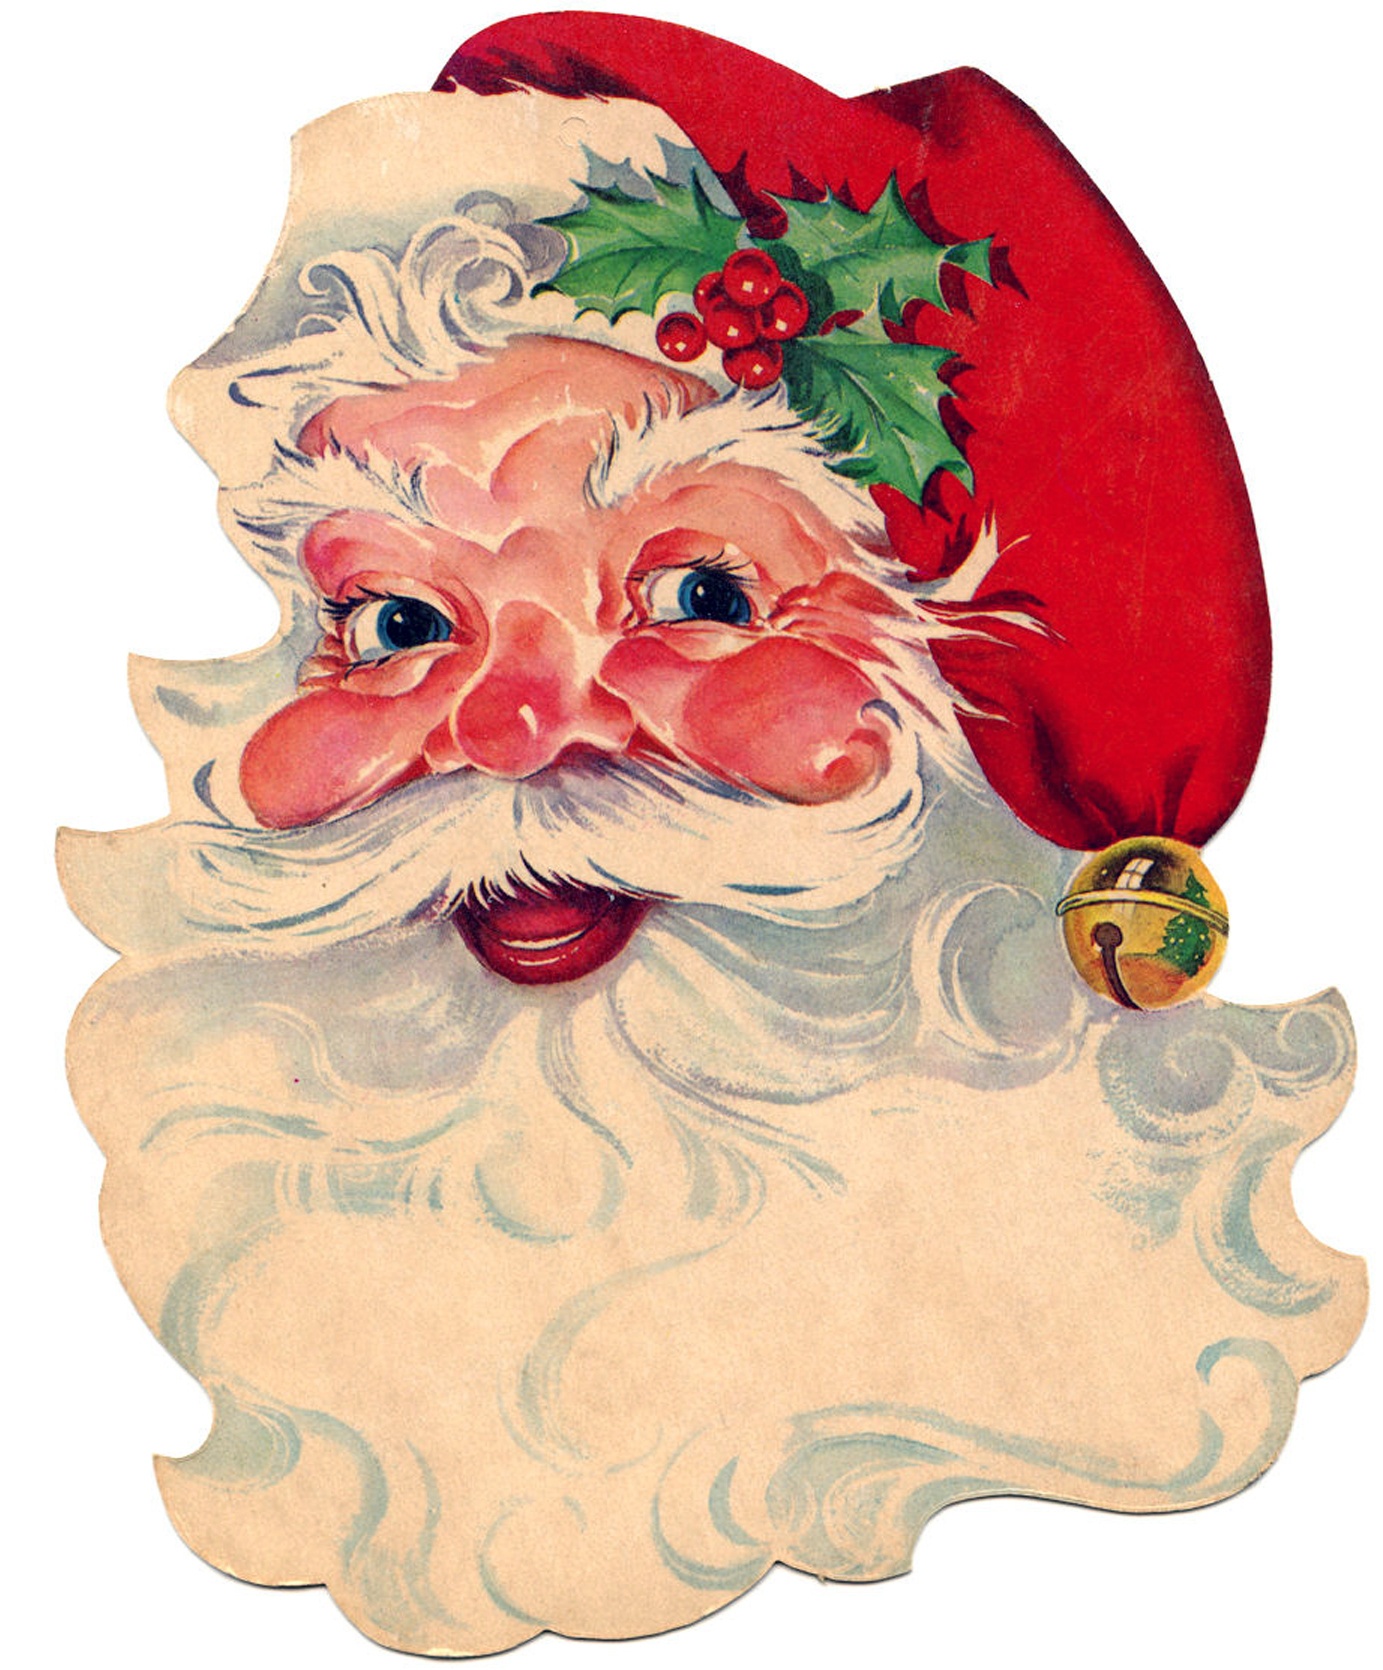 Free Vintage Clip Art - Santa, Santa, Santa! - The Graphics Fairy - Free Printable Vintage Christmas Clip Art